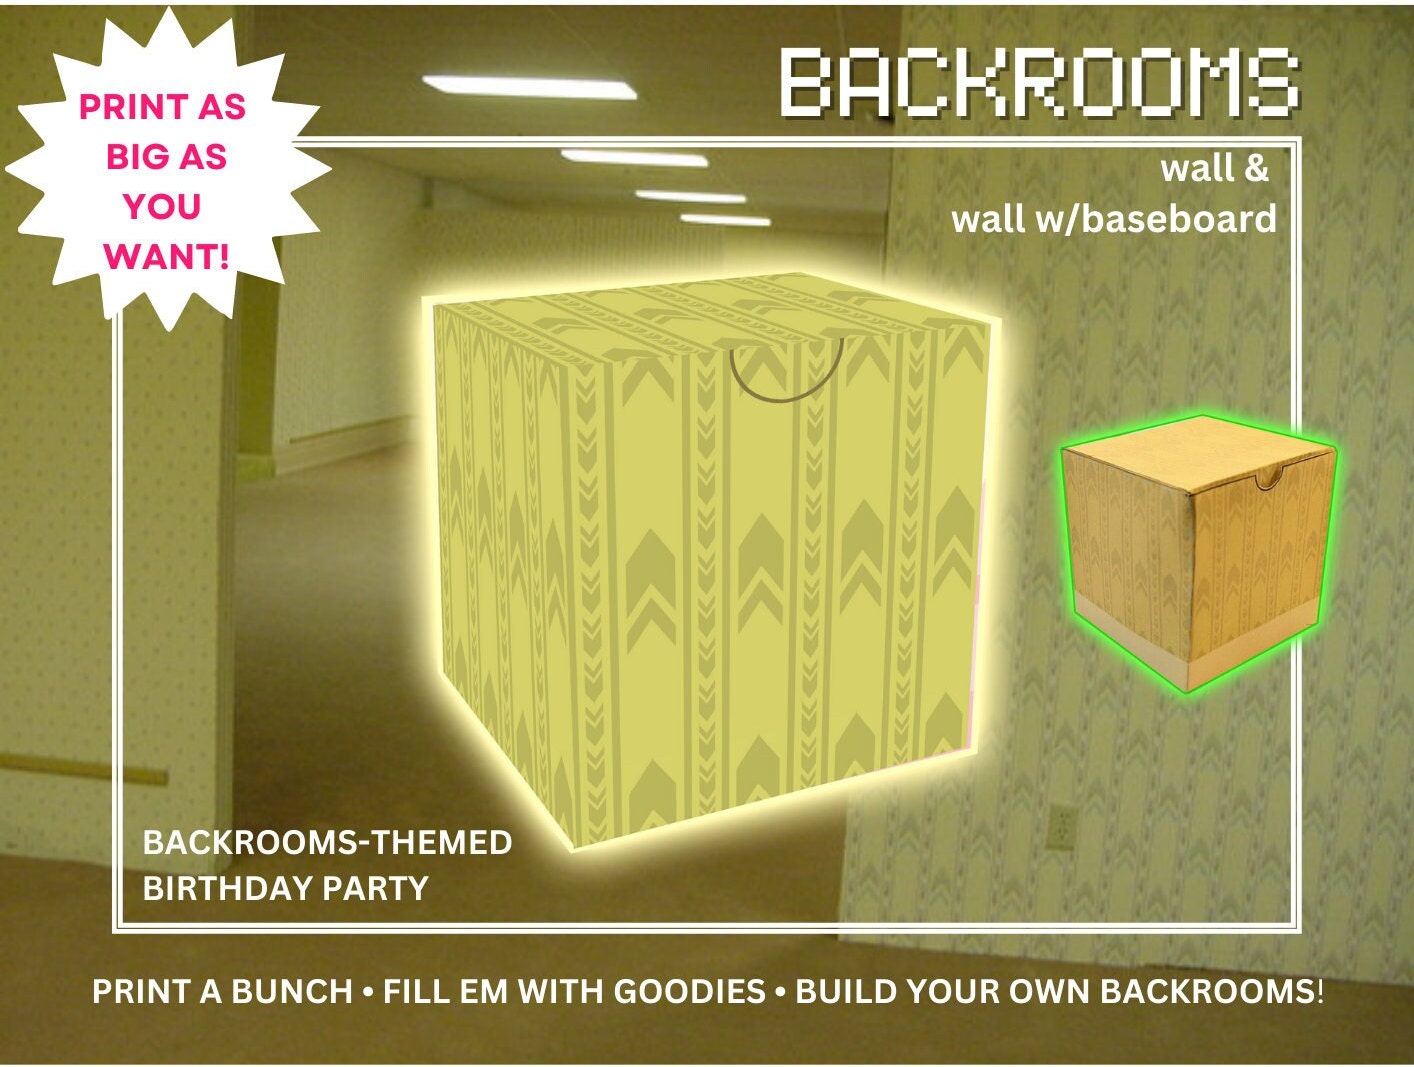 level 2 backrooms  Black rooms, Weird dreams, Room inspo